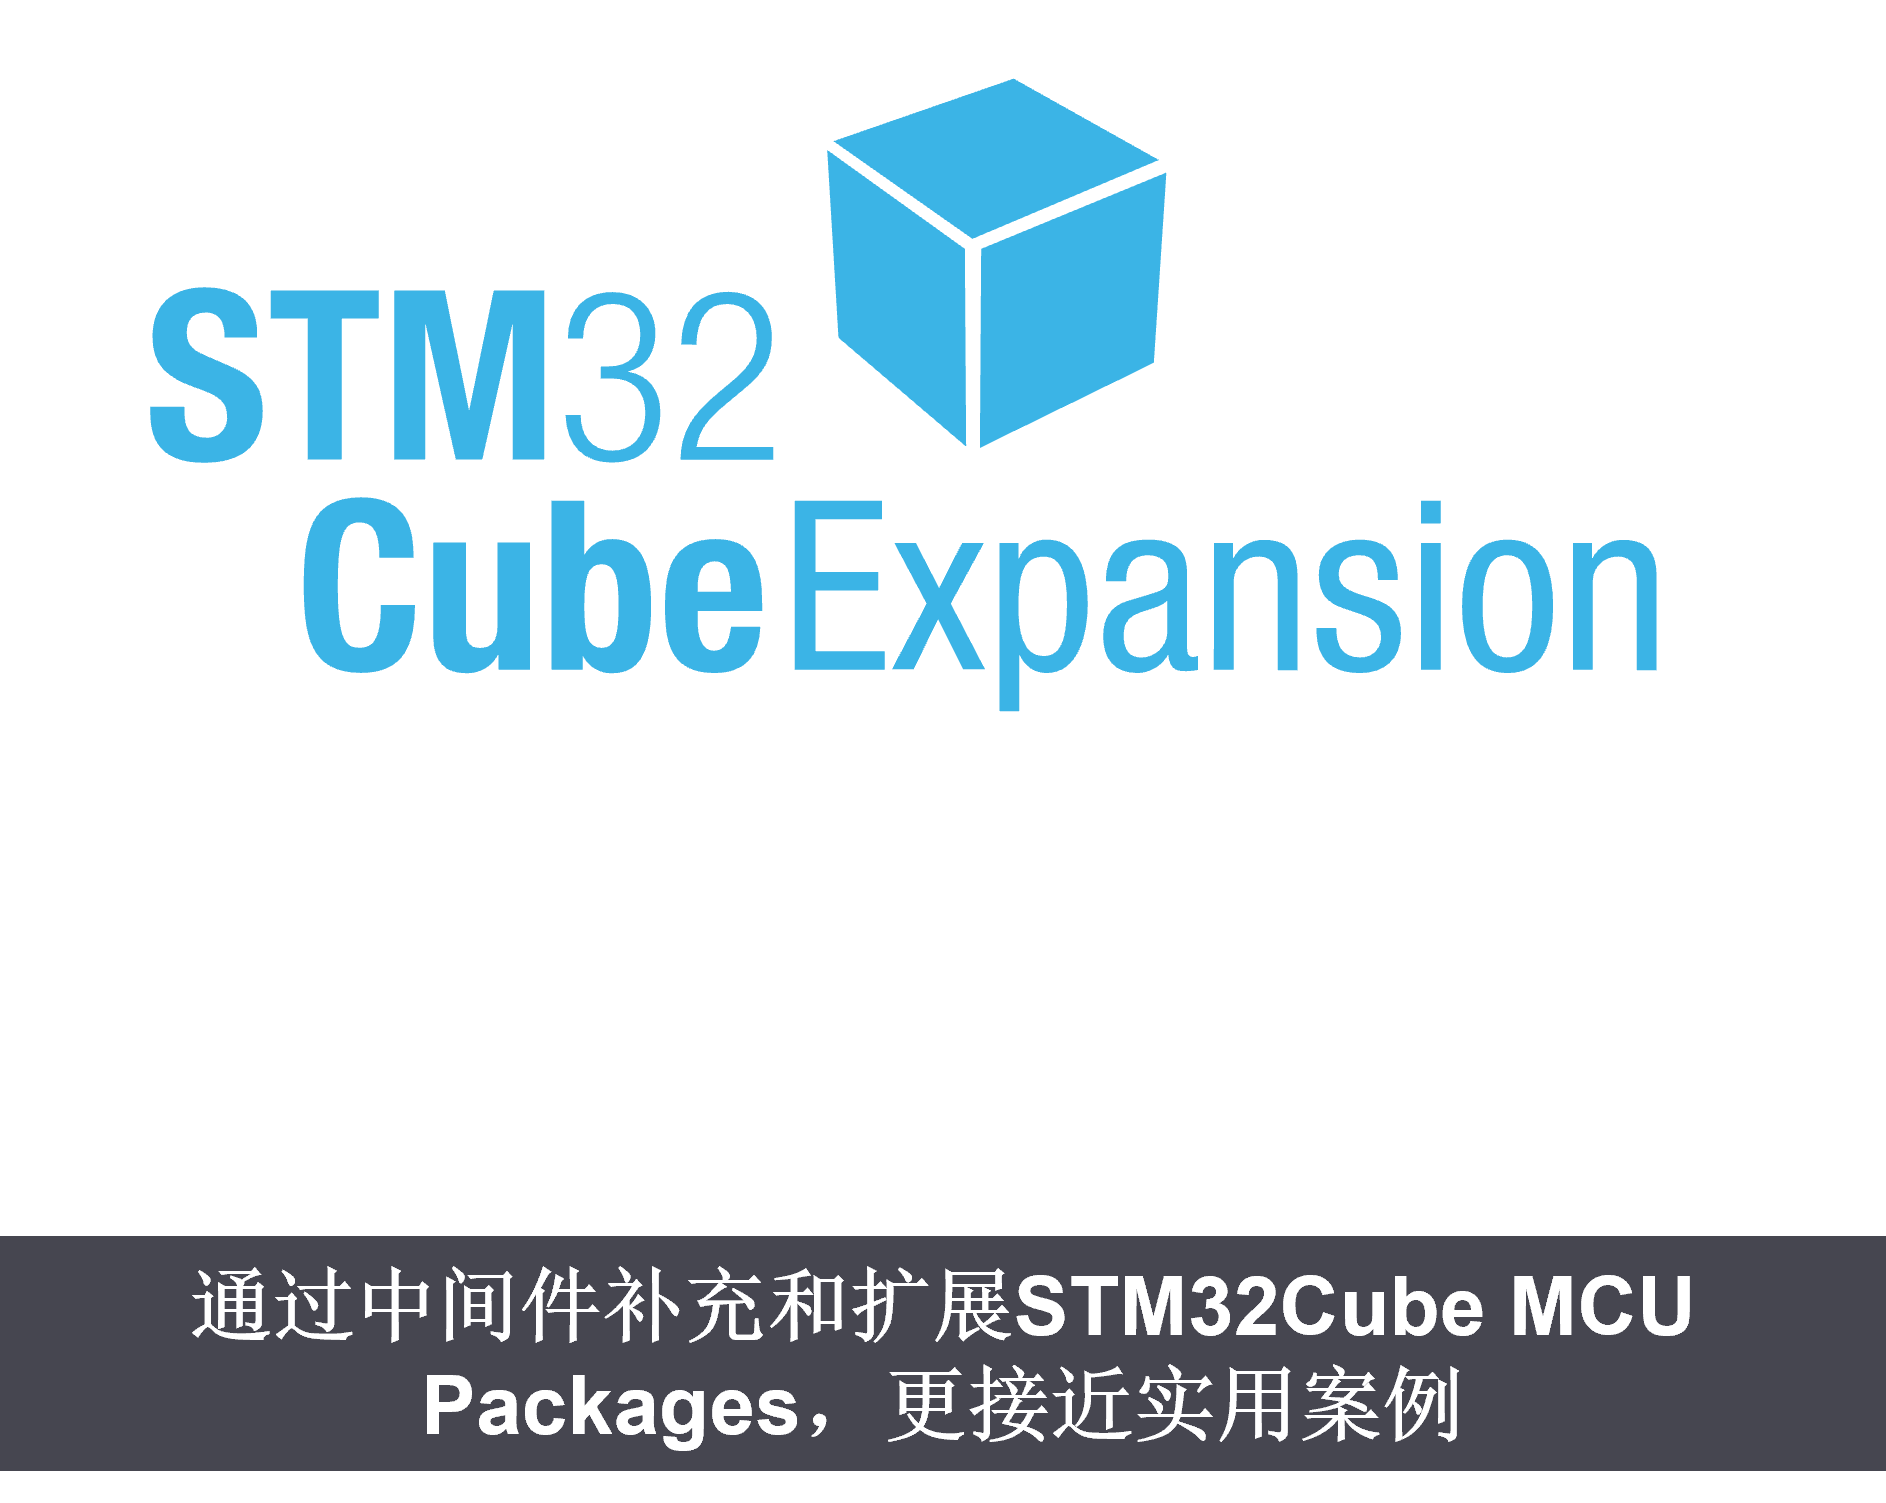 STM32Cube Expansion